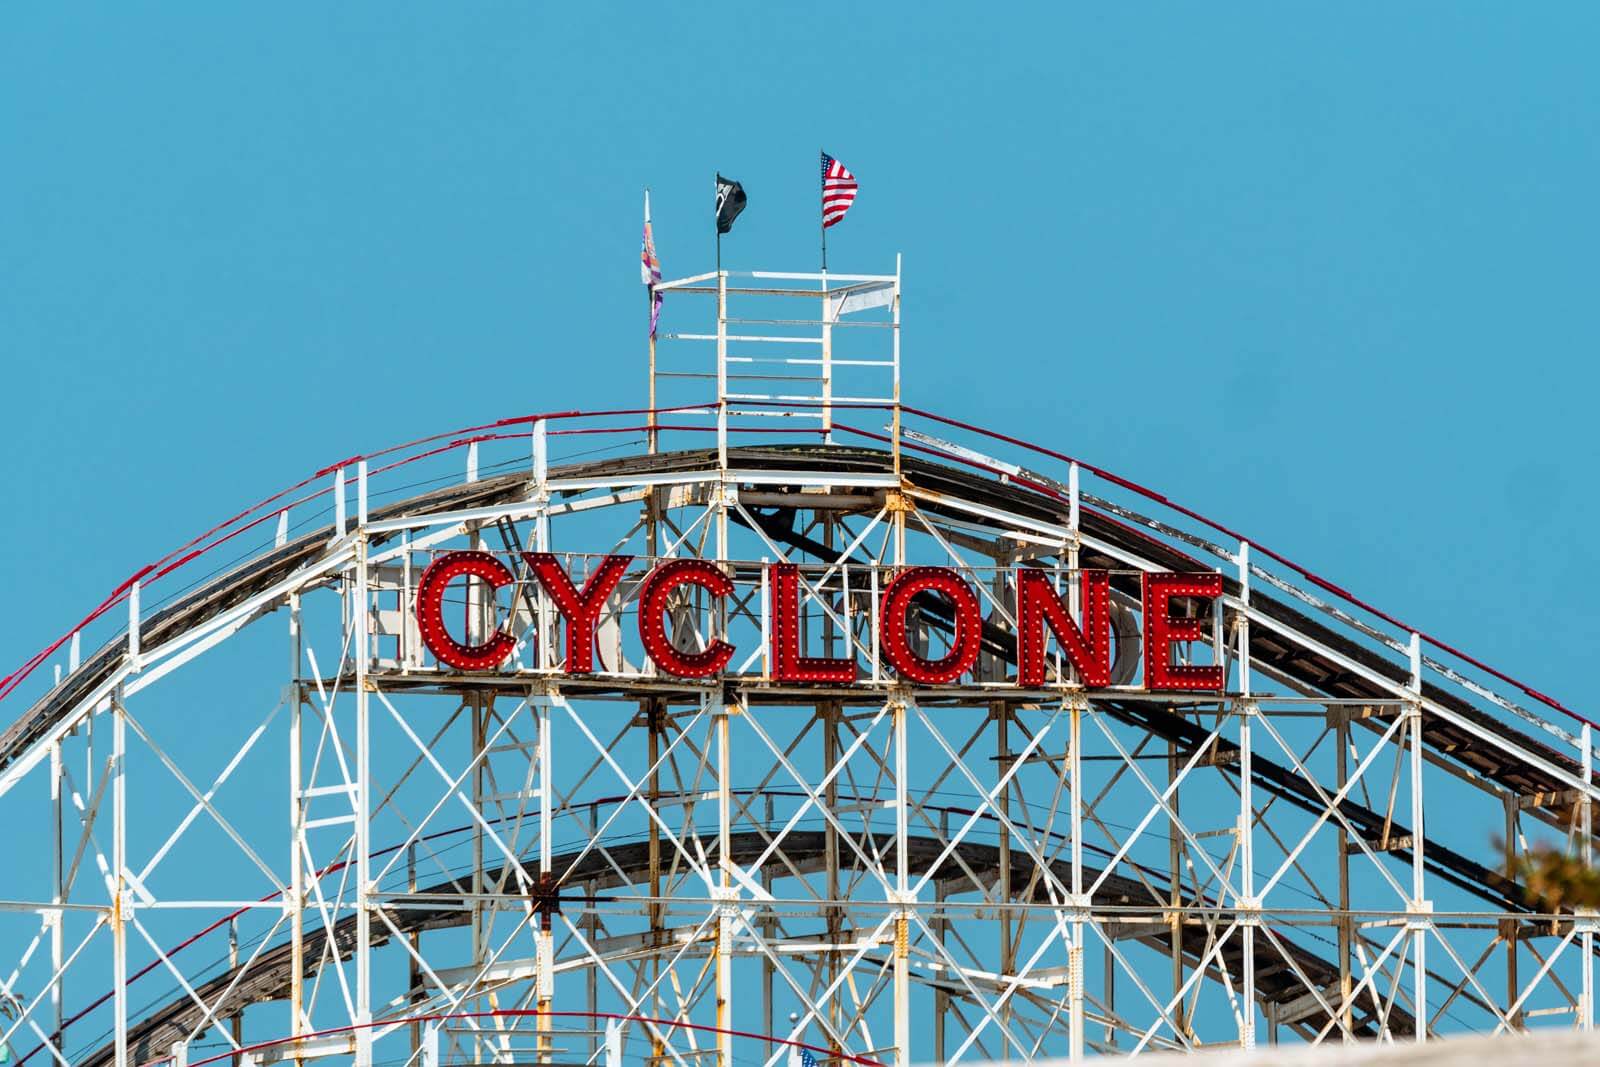 Cyclone Rollercoaster at Coney Island